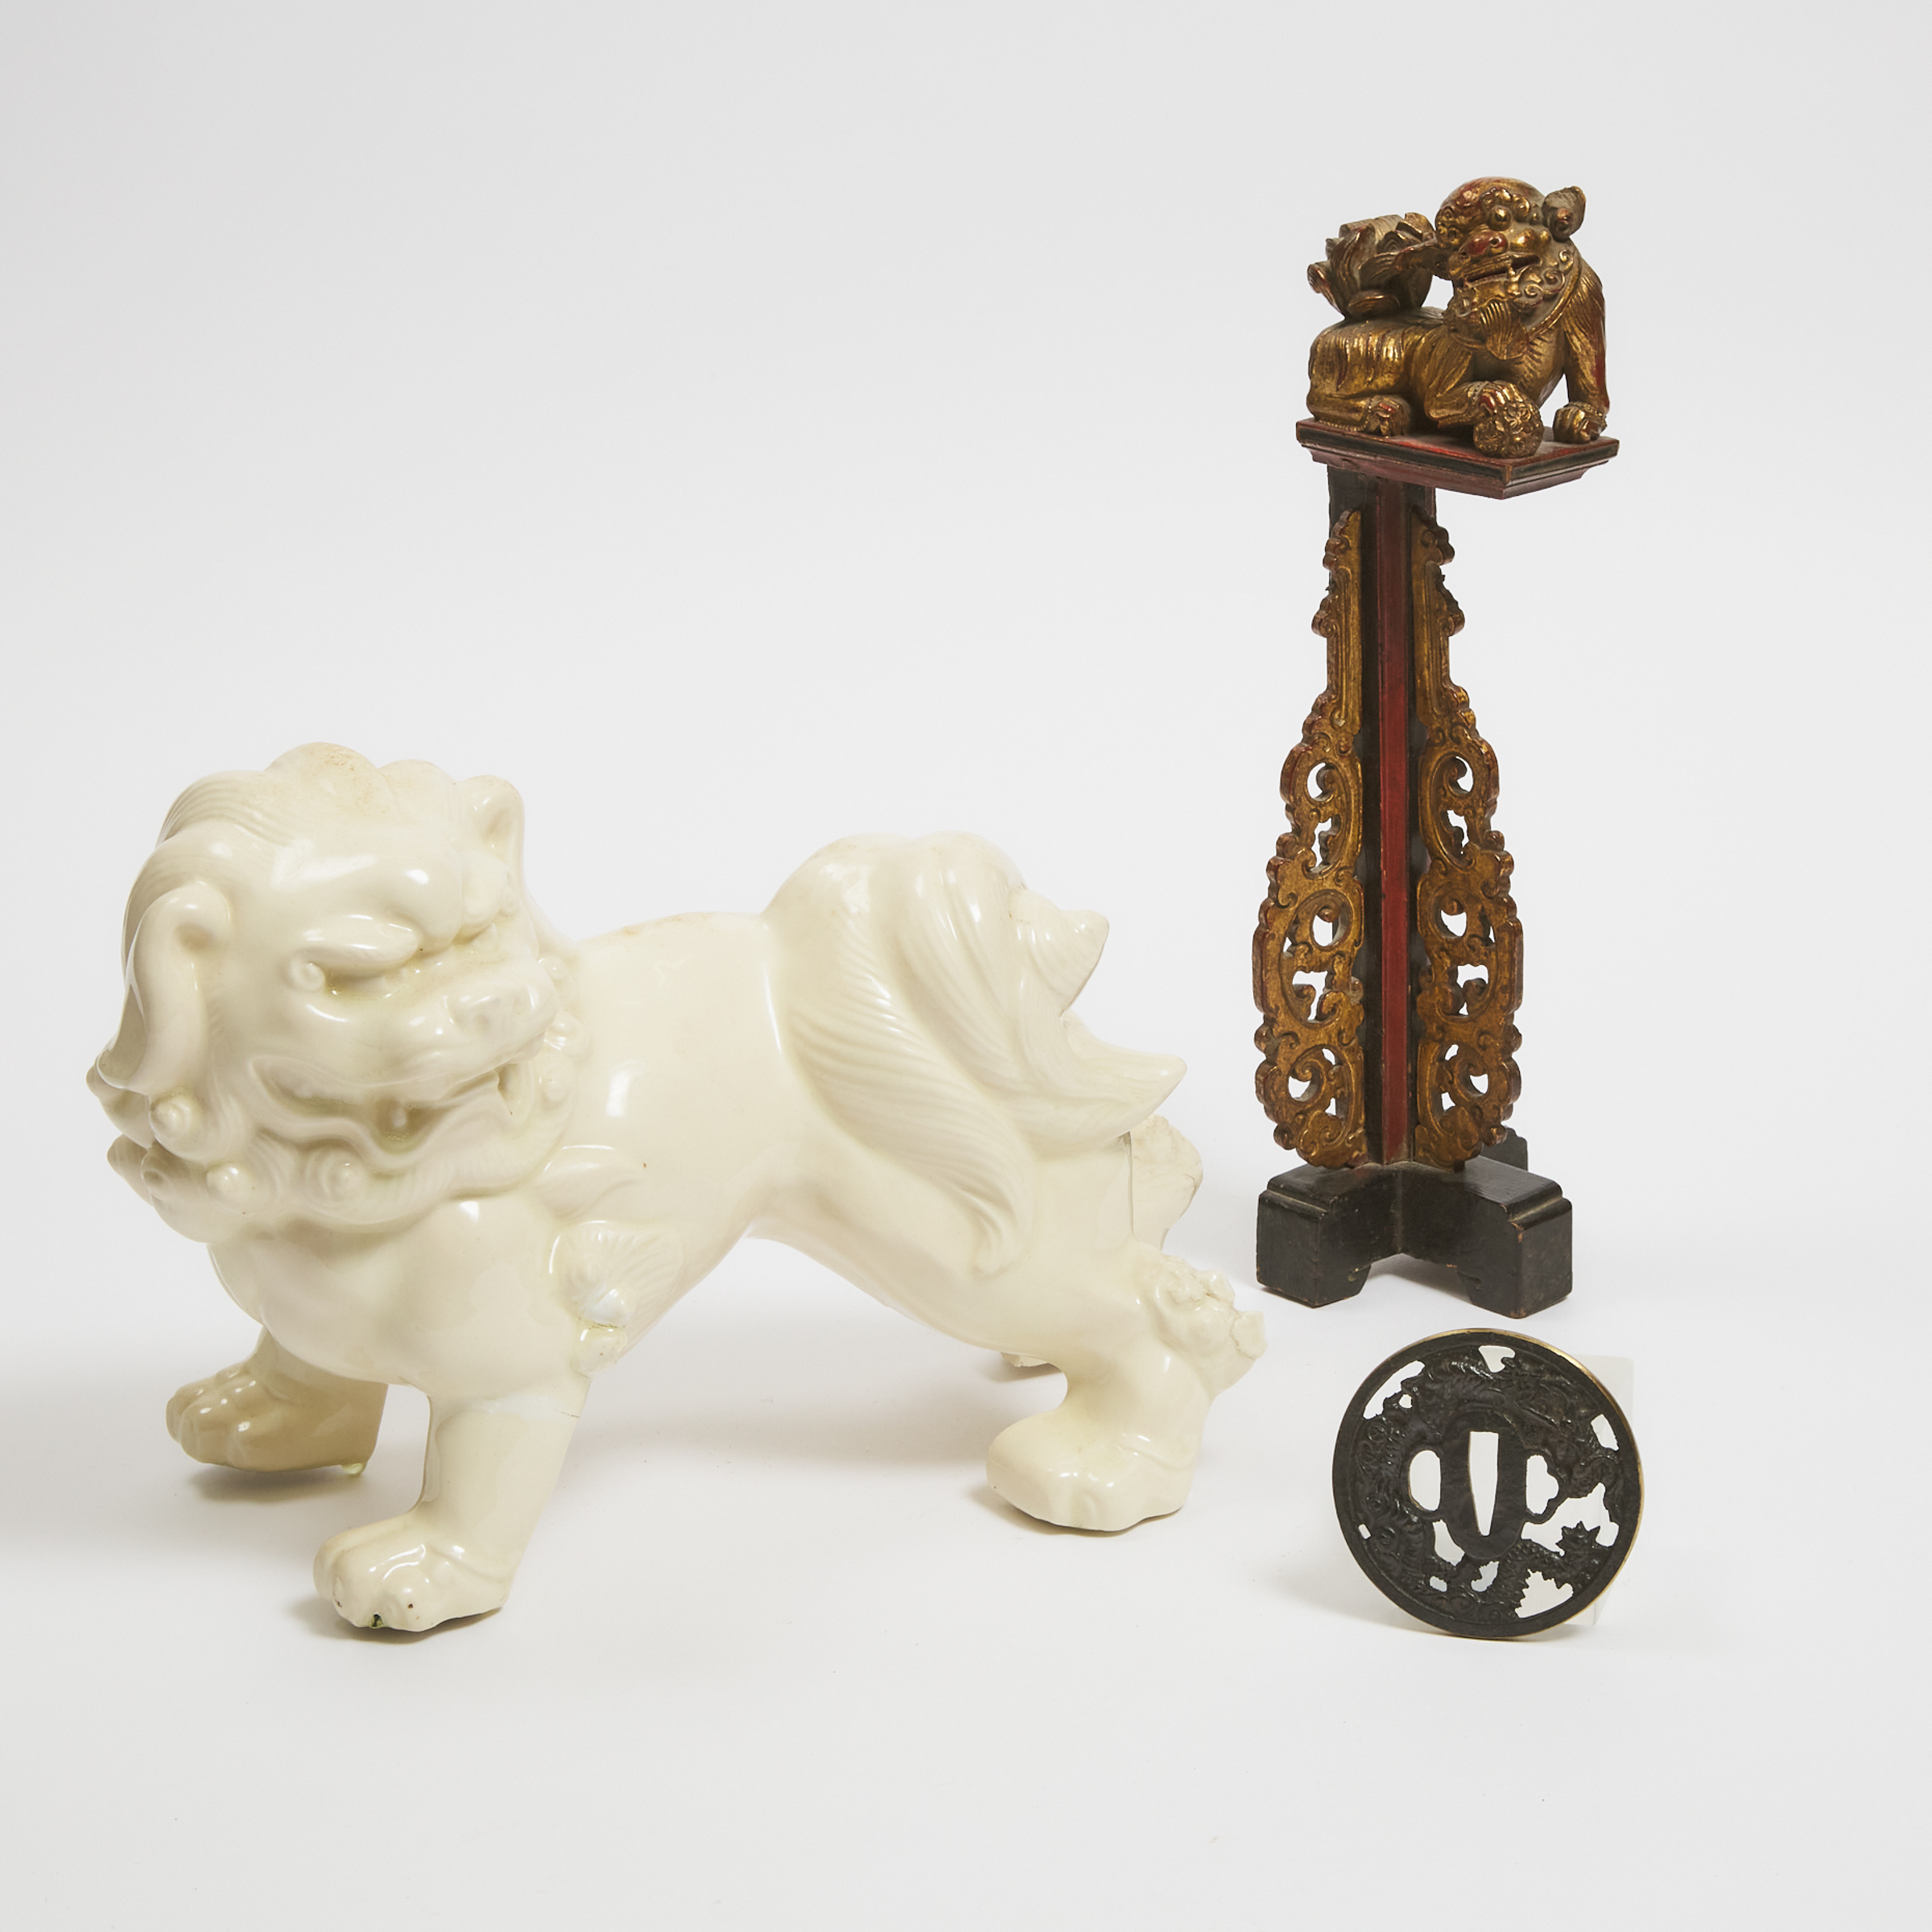 A White Glazed Ceramic Foo Dog, Together With a Gilt Wood Bracket and a Japanese Tsuba, 19th/20th Century